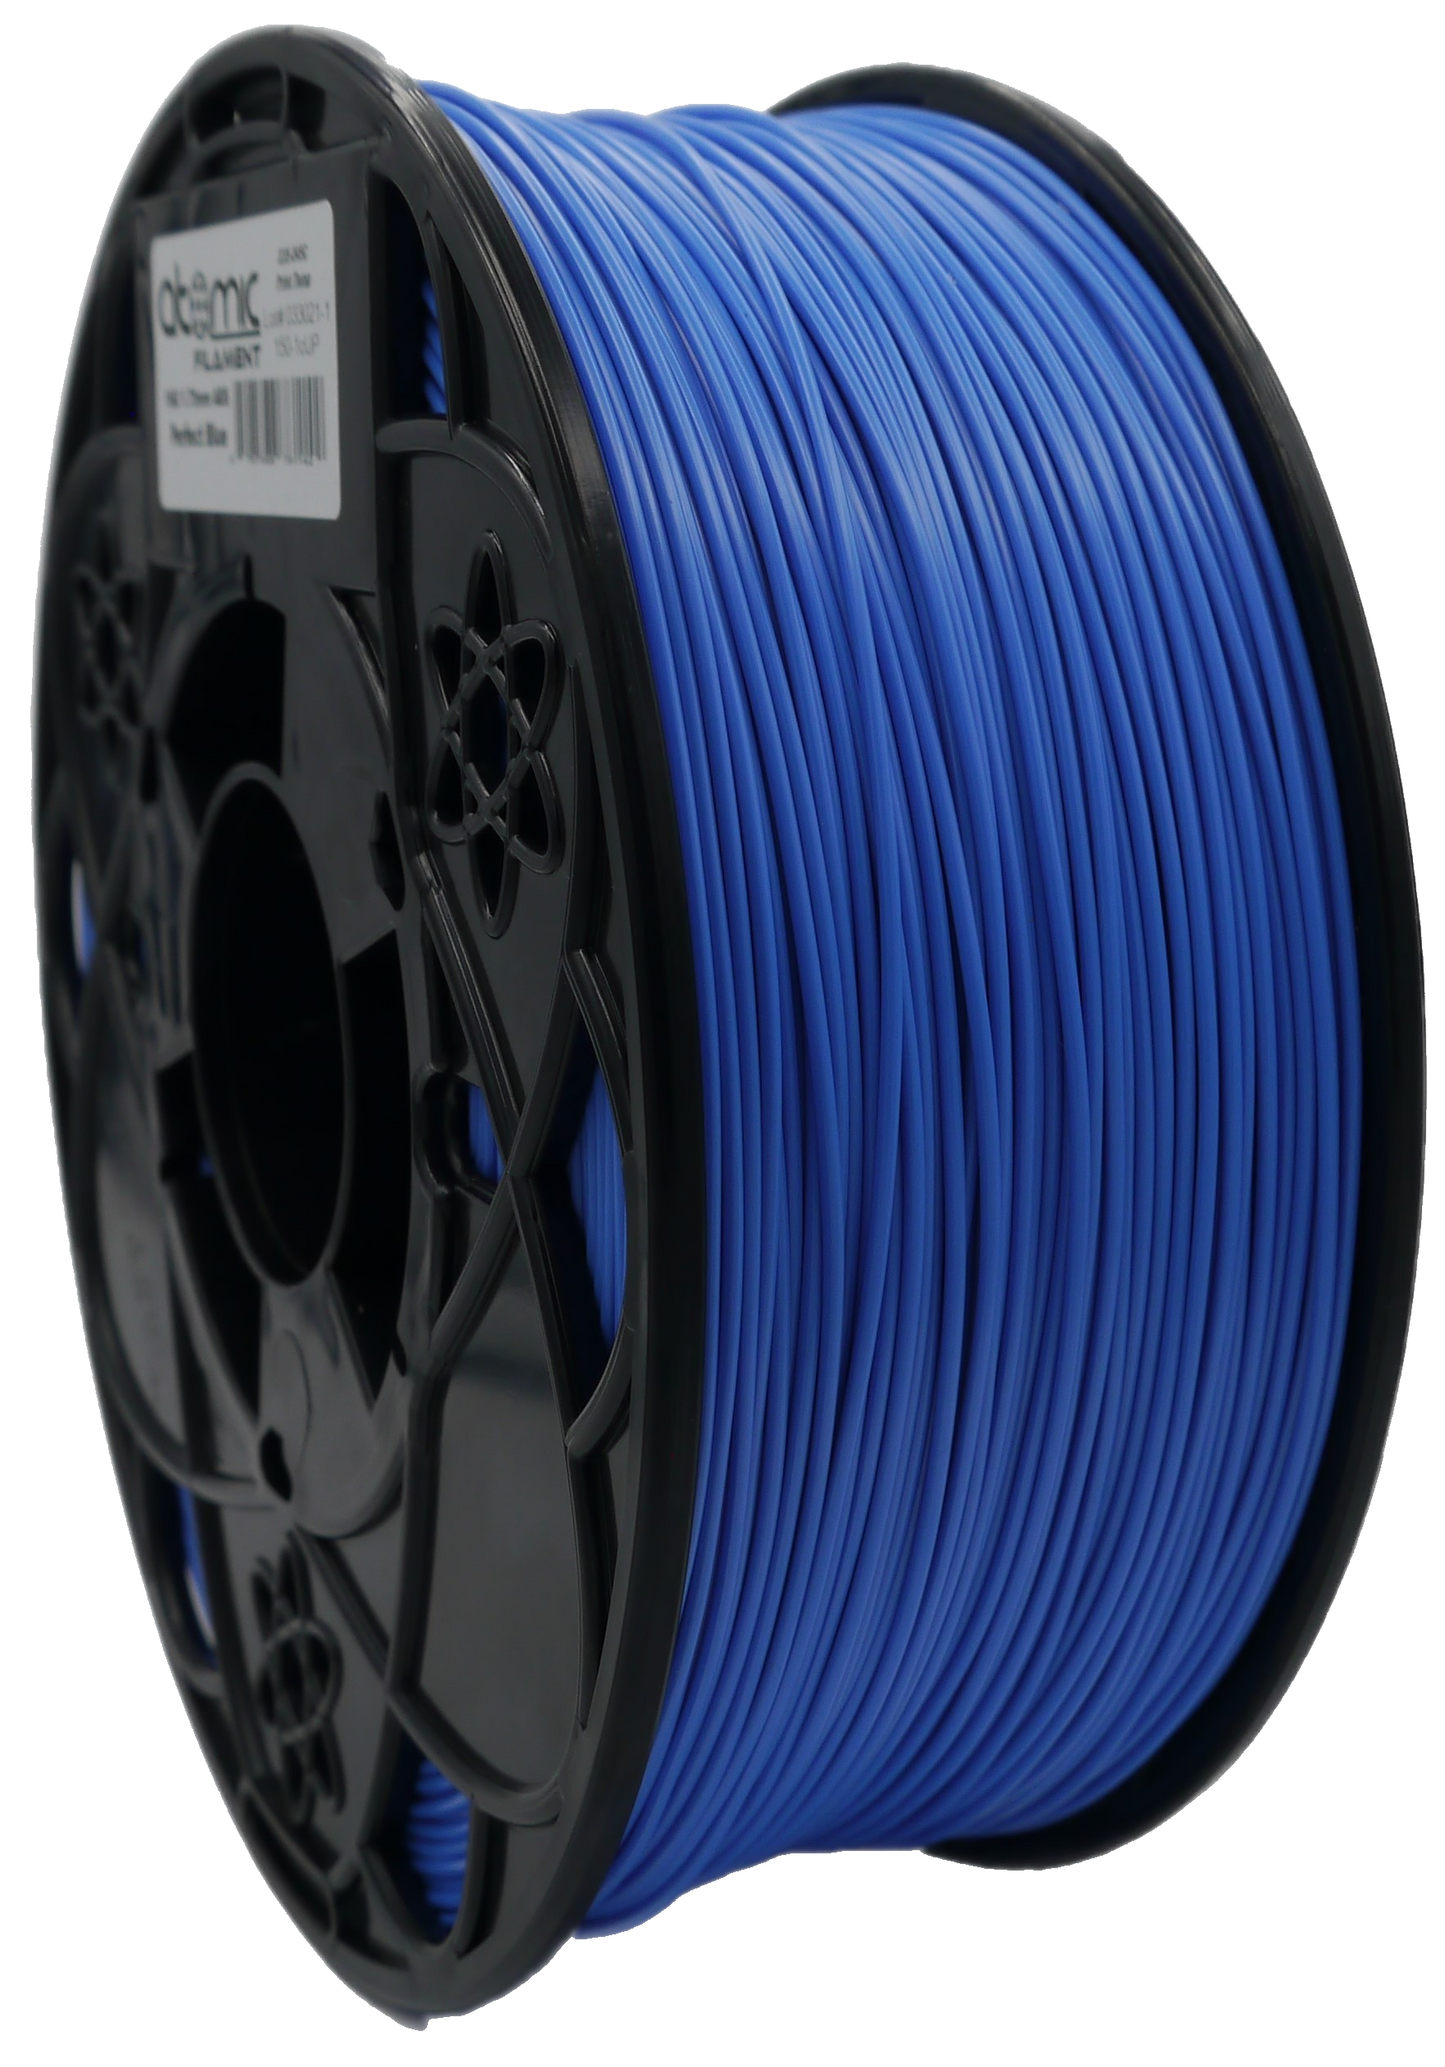 3.5KG Perfect Blue ABS Filament